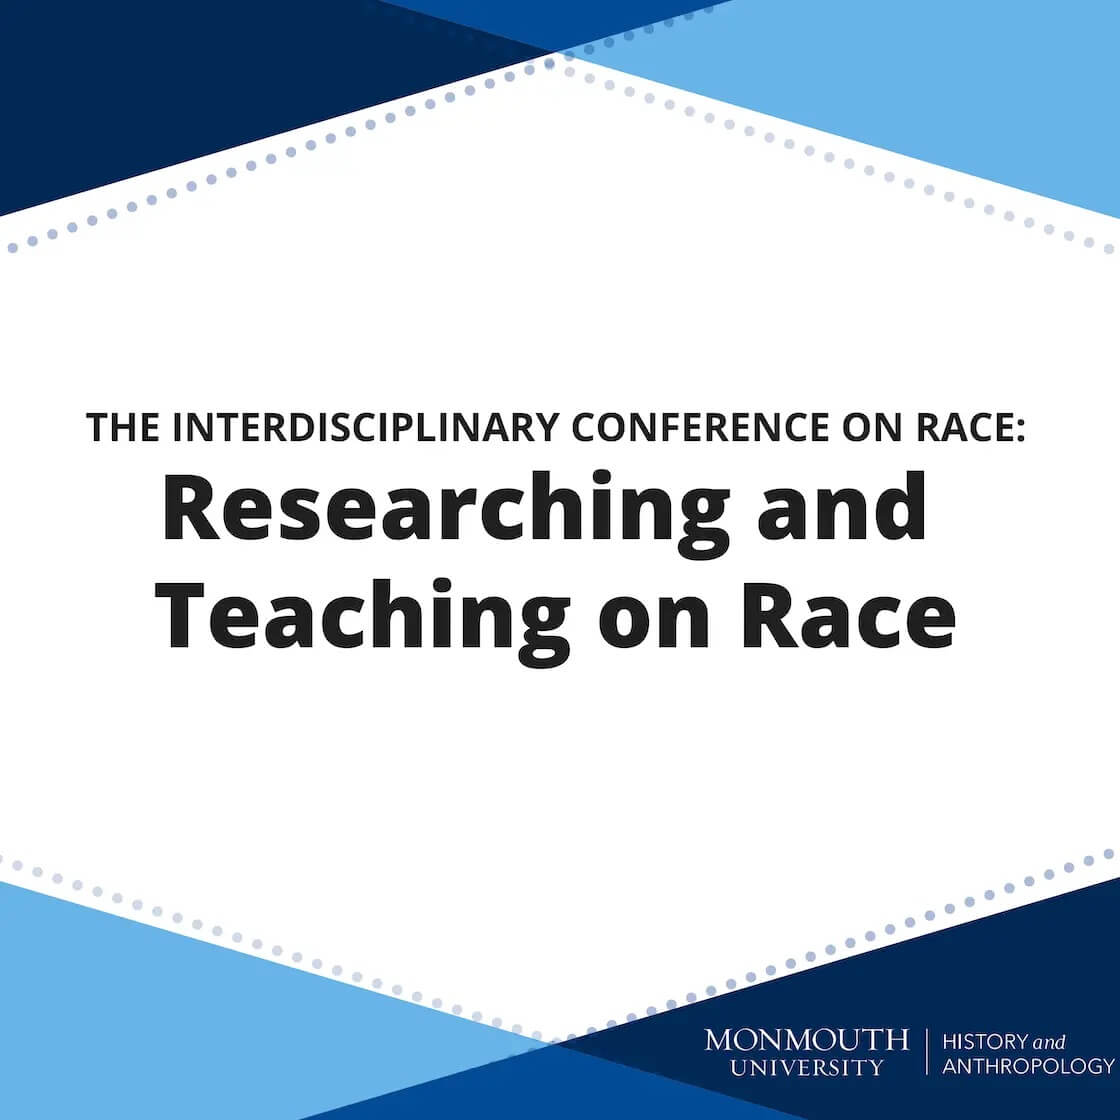 Interdisciplinary Conference on Race on Nov. 12